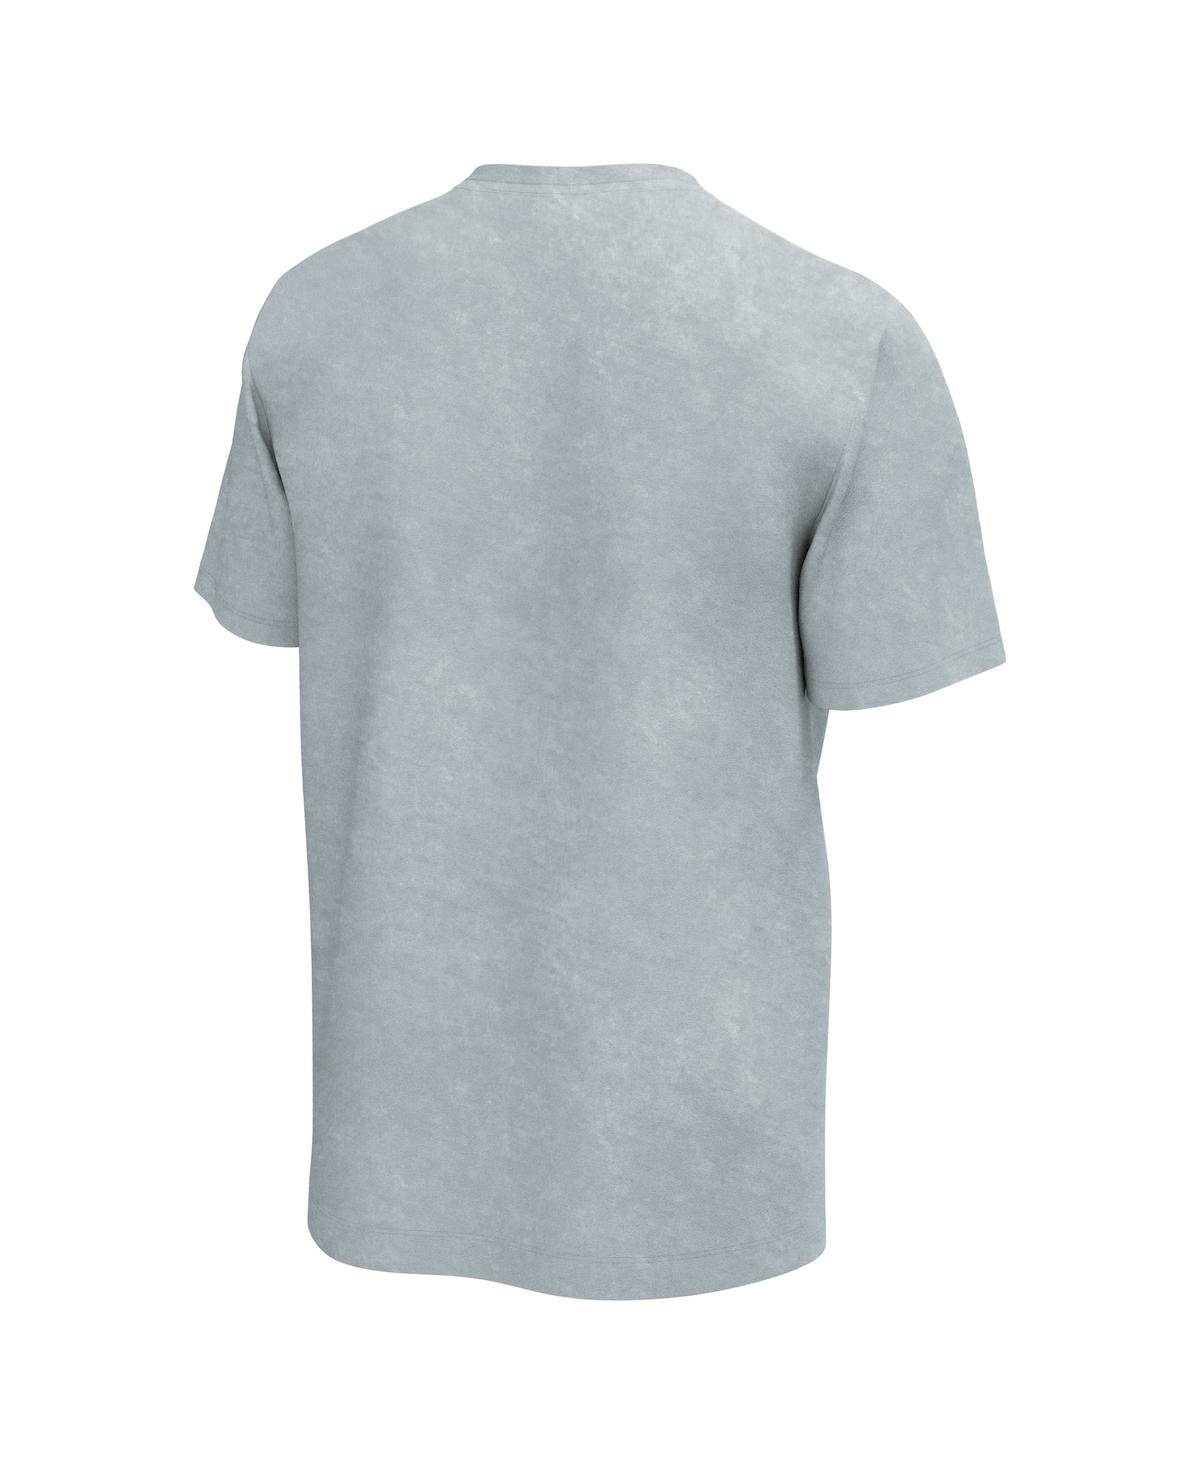 Shop Philcos Men's Gray Distressed Muhammad Ali Fighting Photo Washed T-shirt